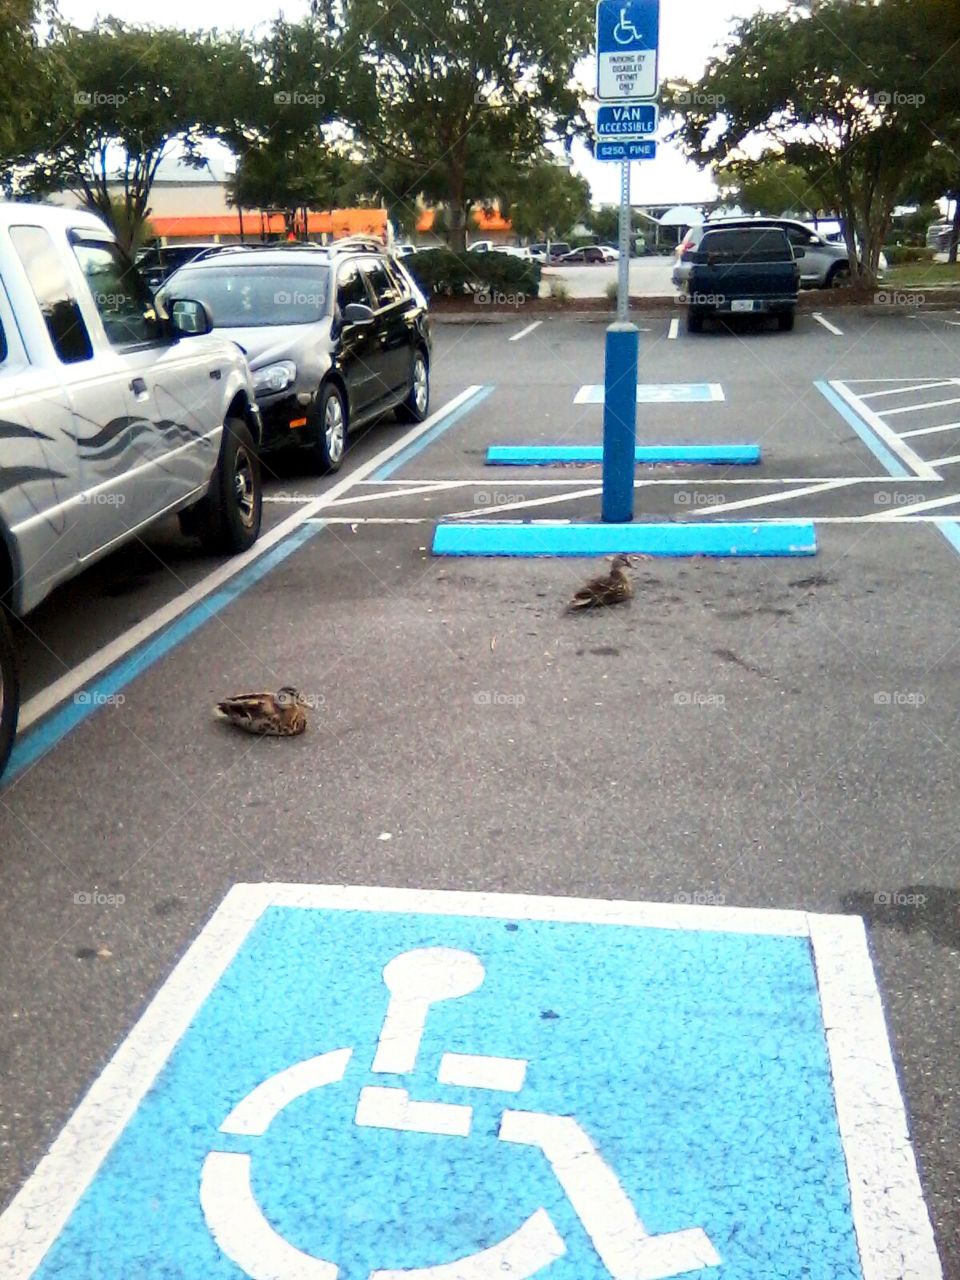 Duck parking